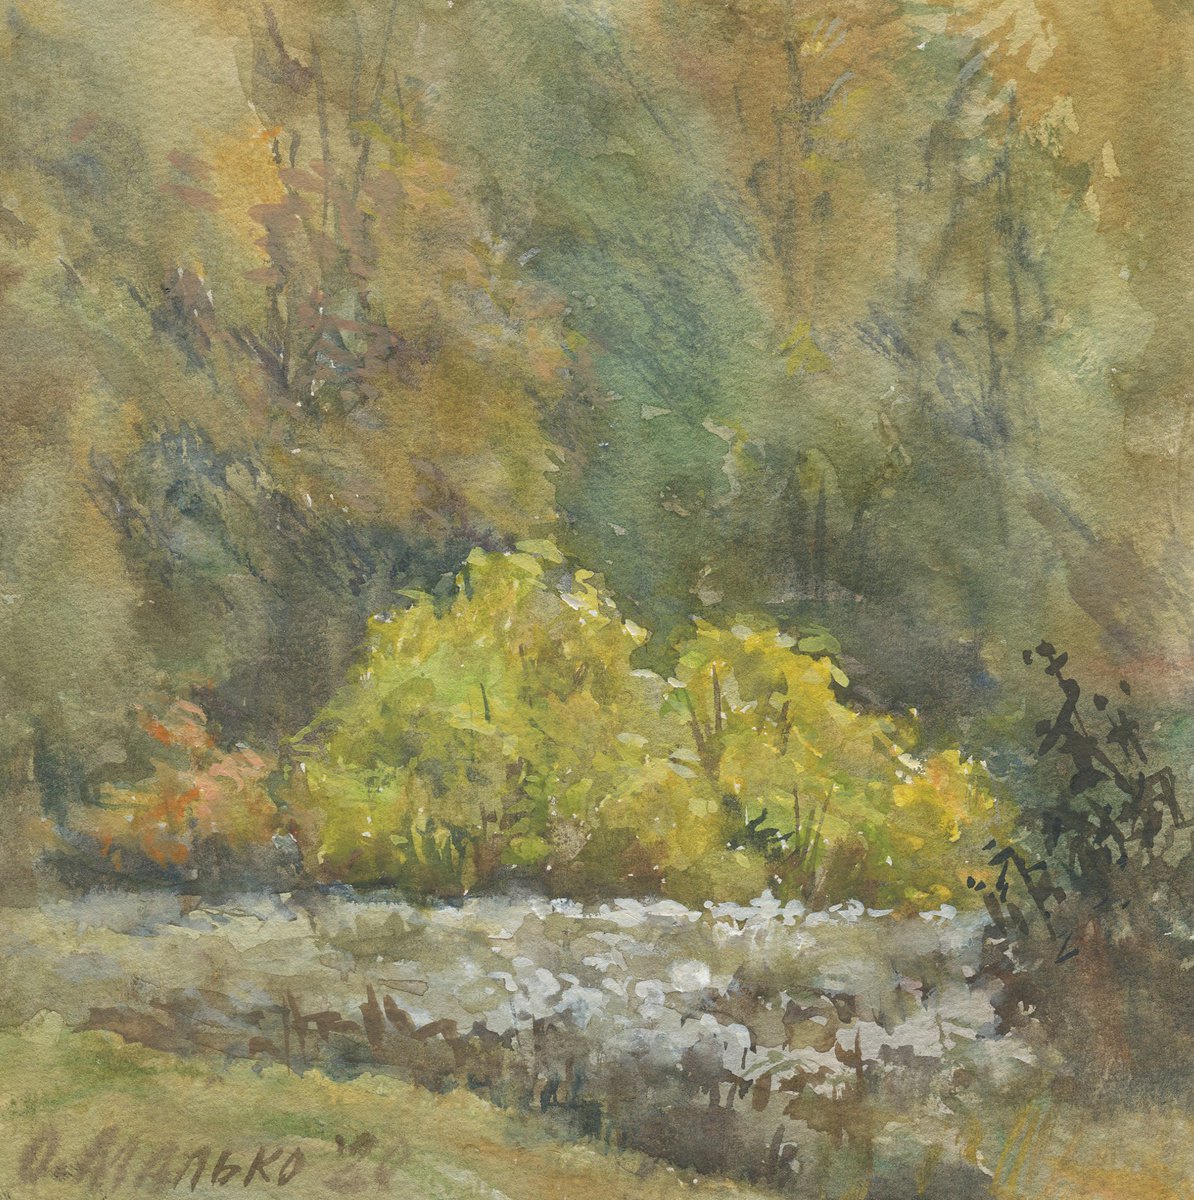 Yellow willow shrubs / Fall season. Autumn nature. Original watercolor painting by Olha Malko